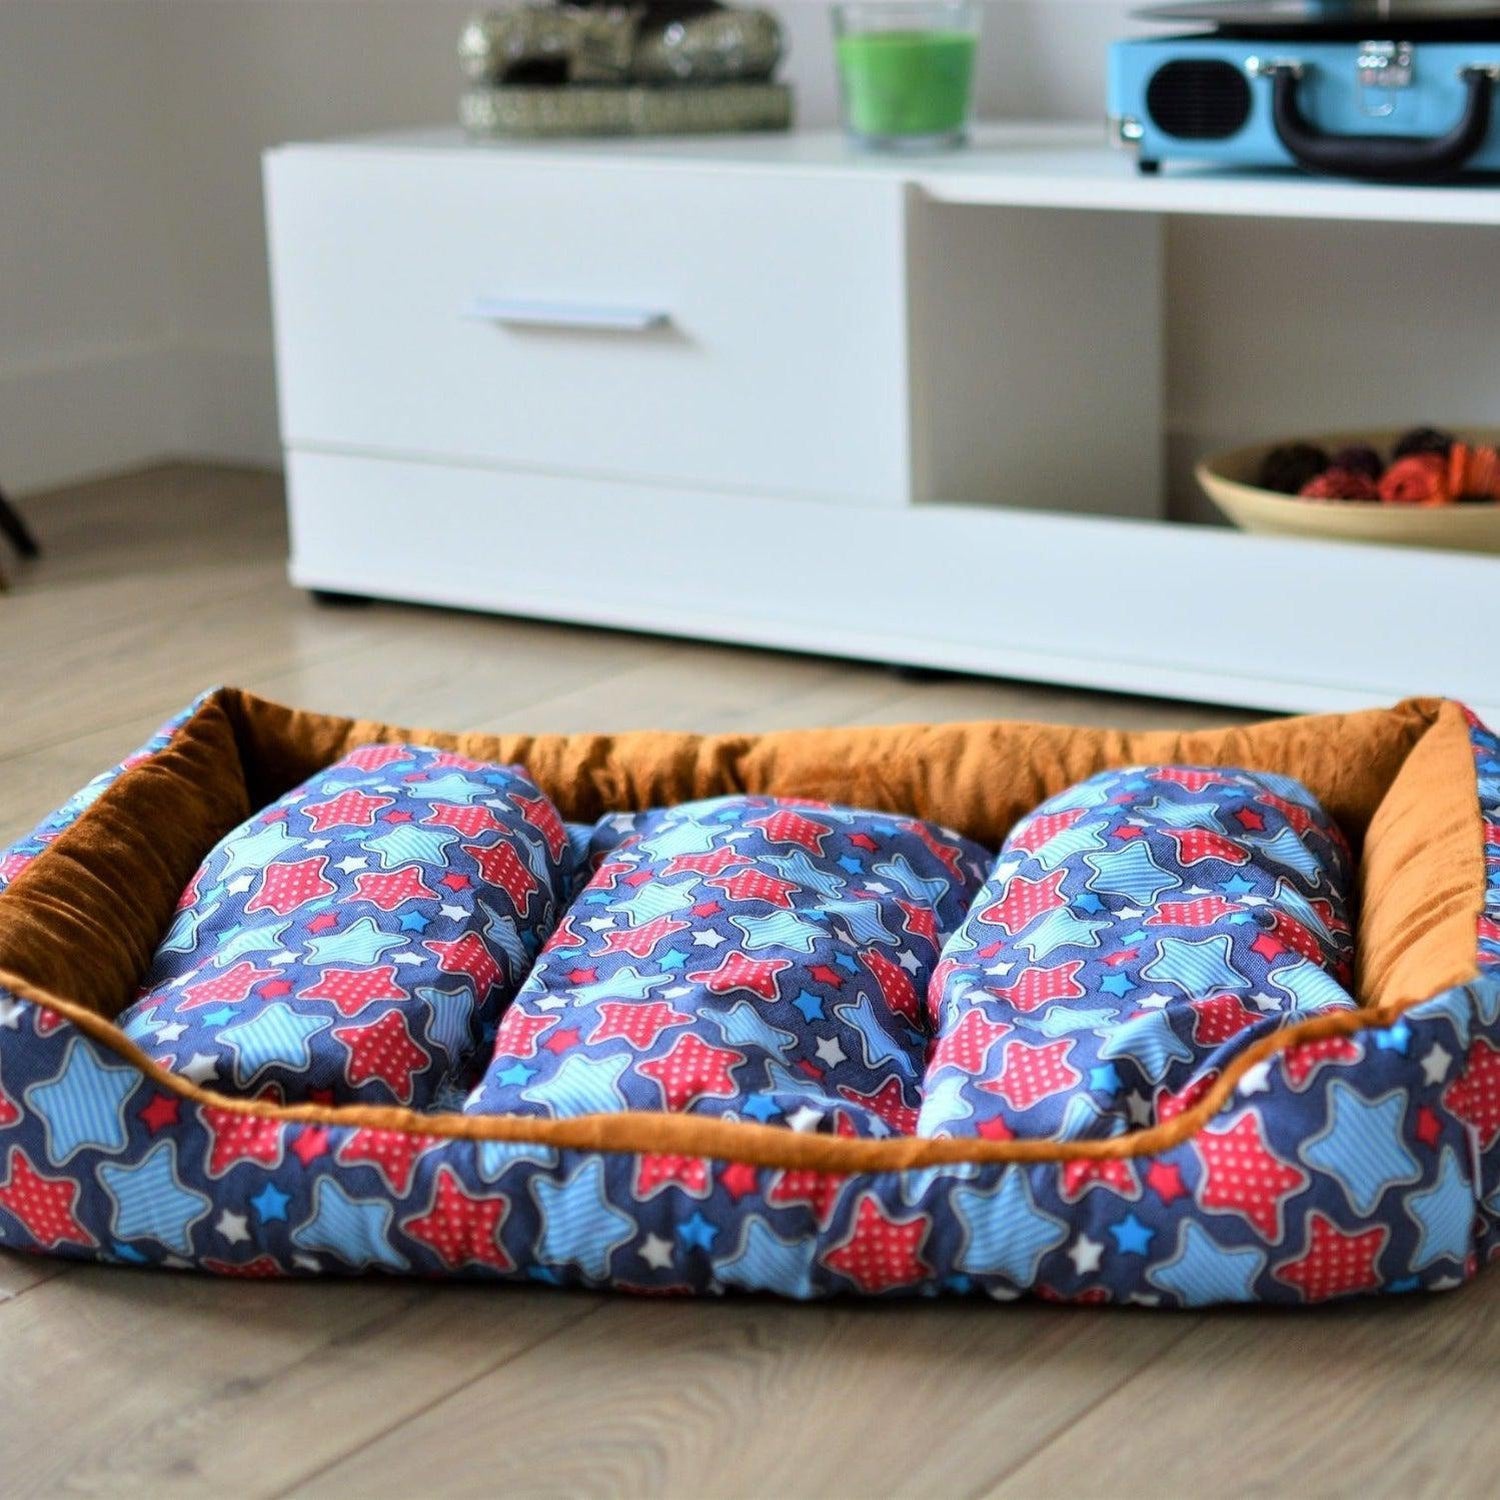 Warm Soft Comfy Dog Bed - Blue Dreams